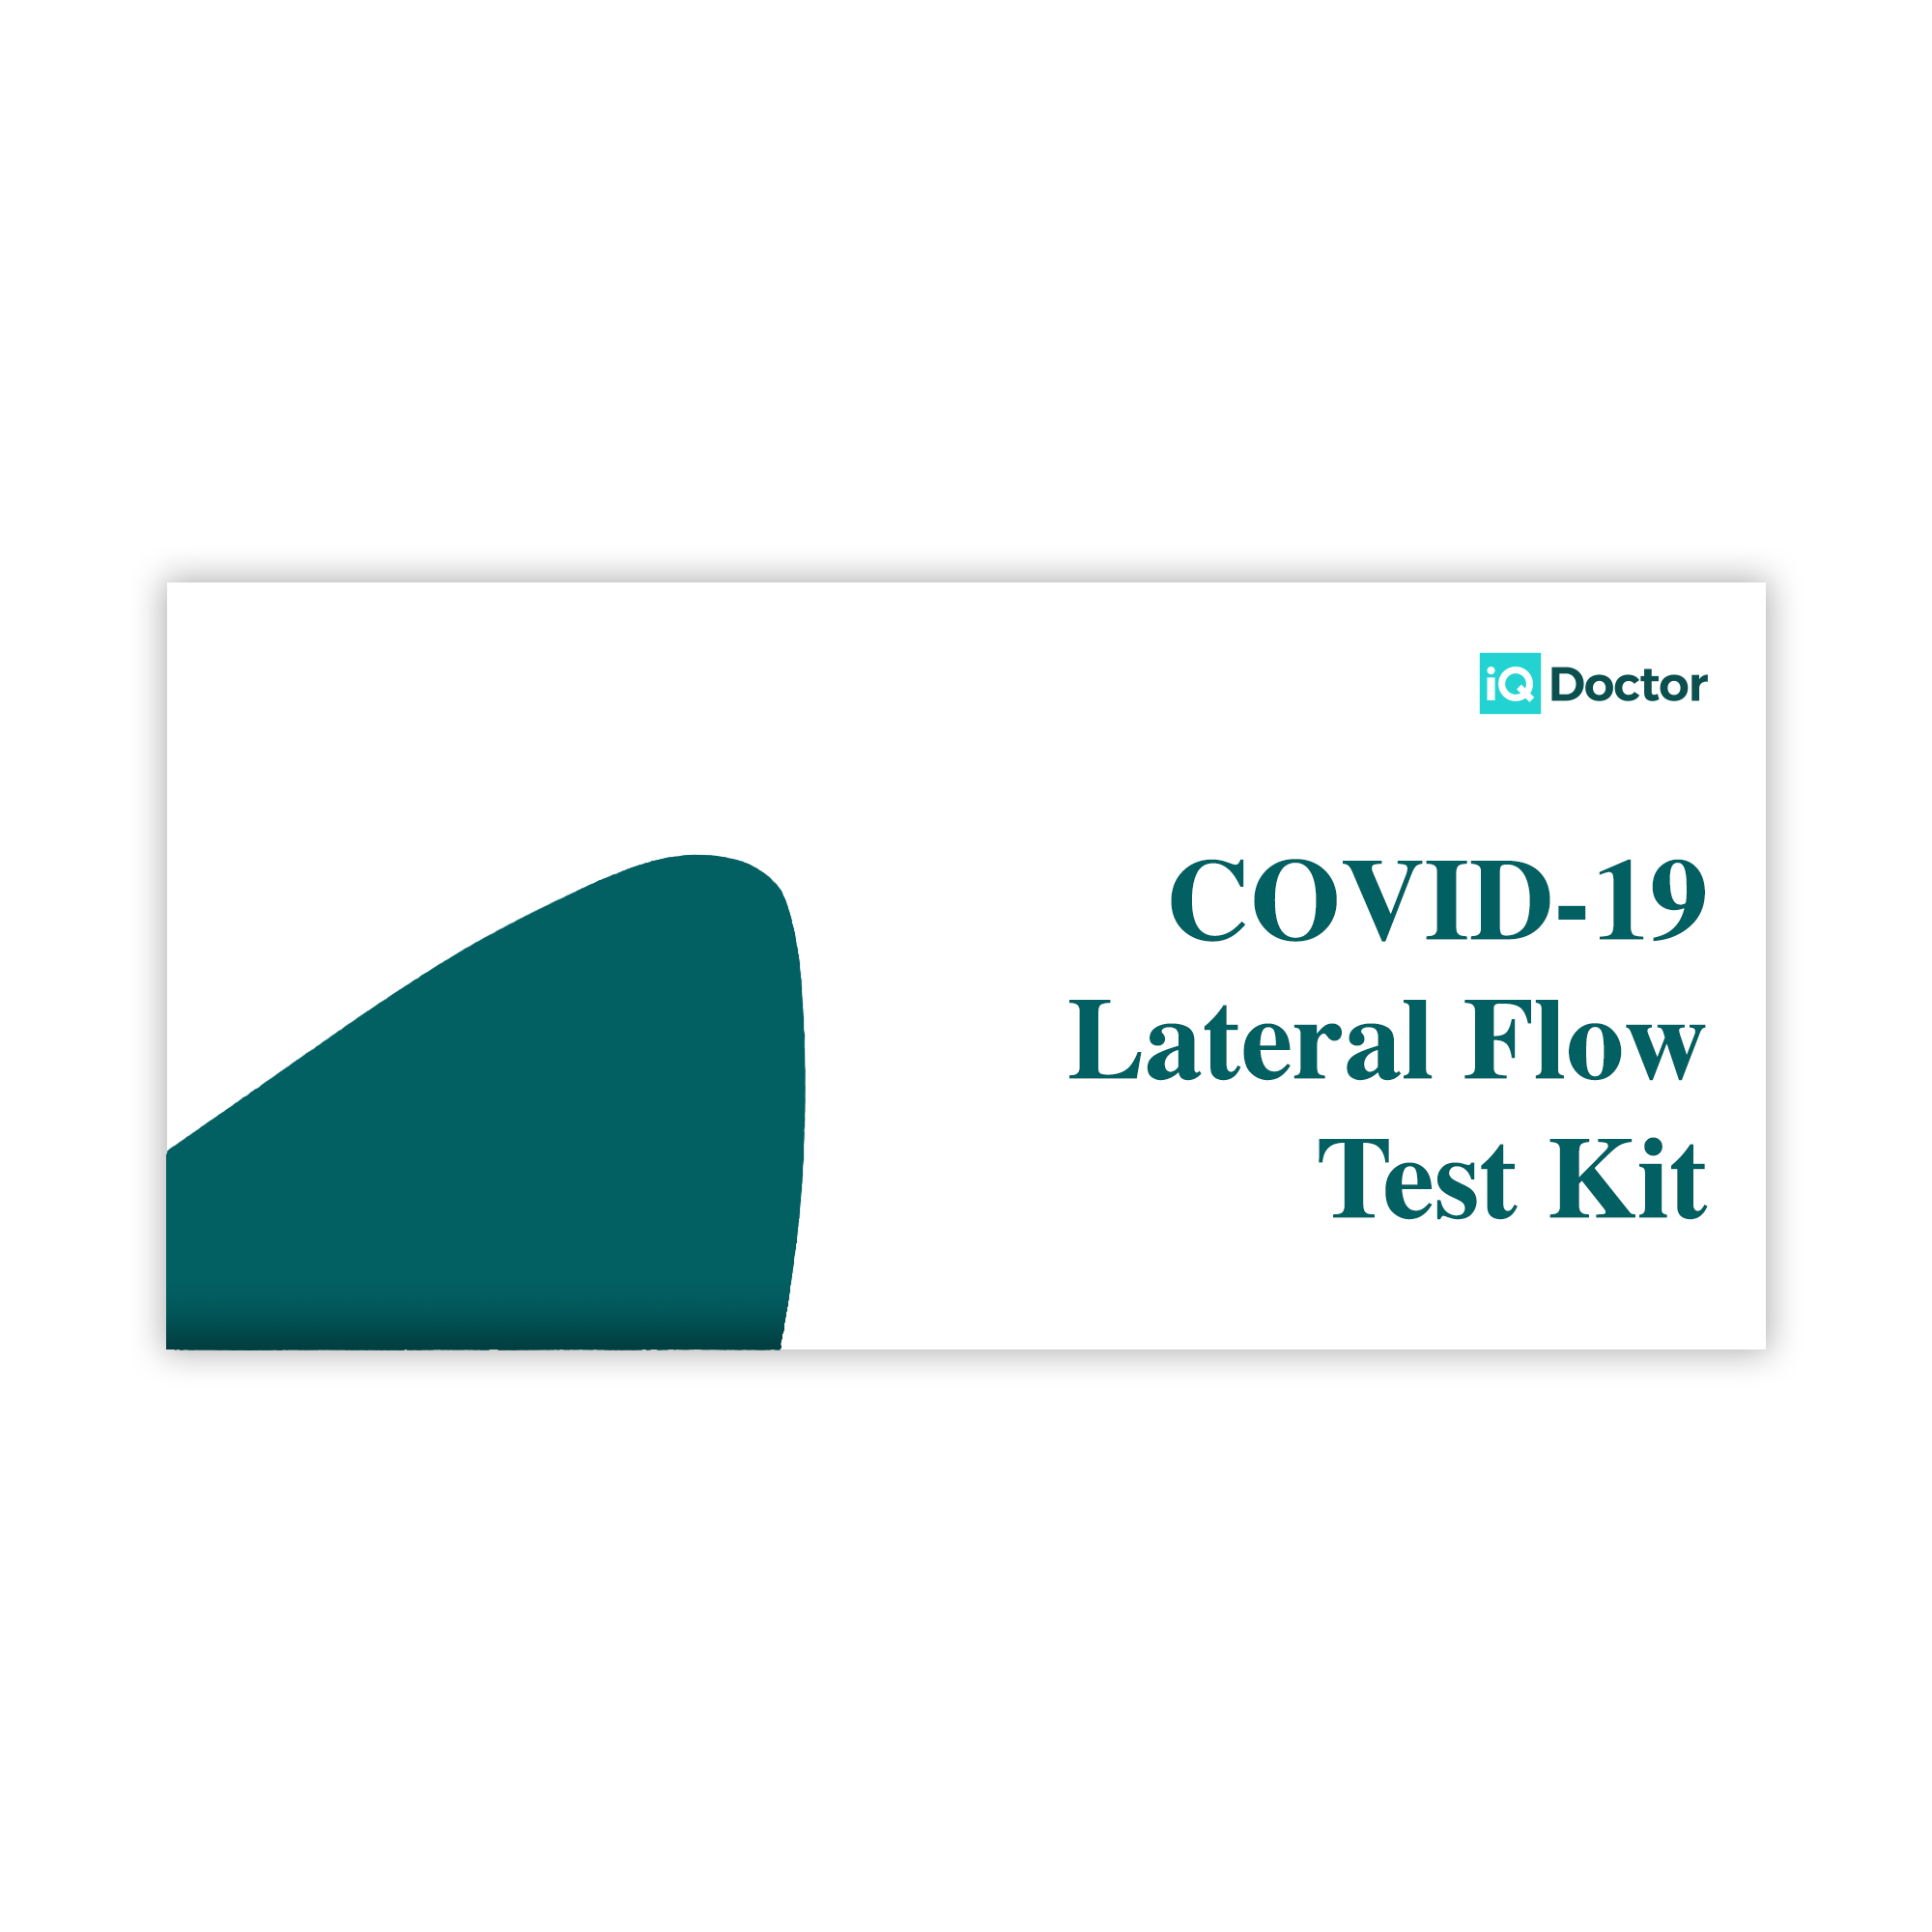 COVID-19 Corona virus home test kit